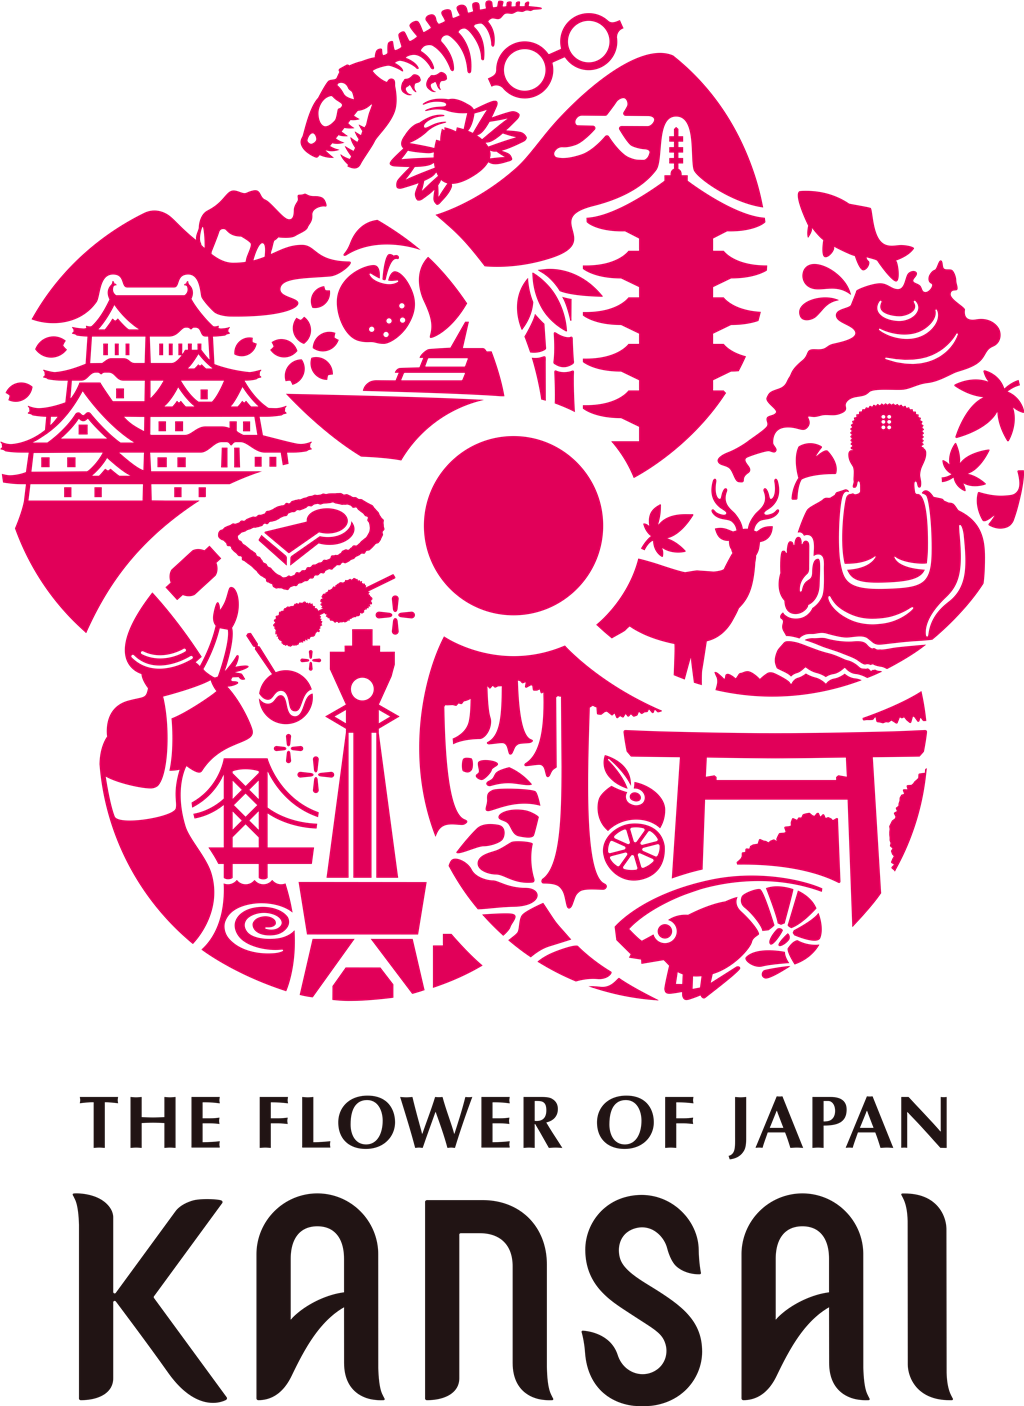 Kansai logotype, transparent .png, medium, large